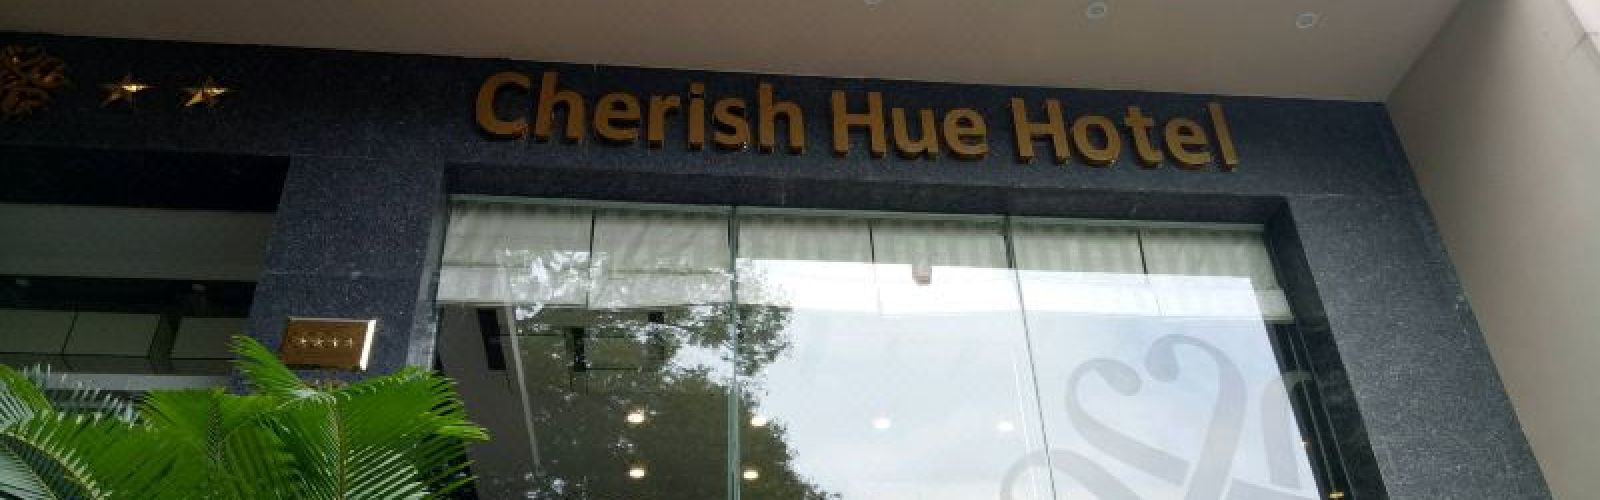 Cherish Hue Hotel